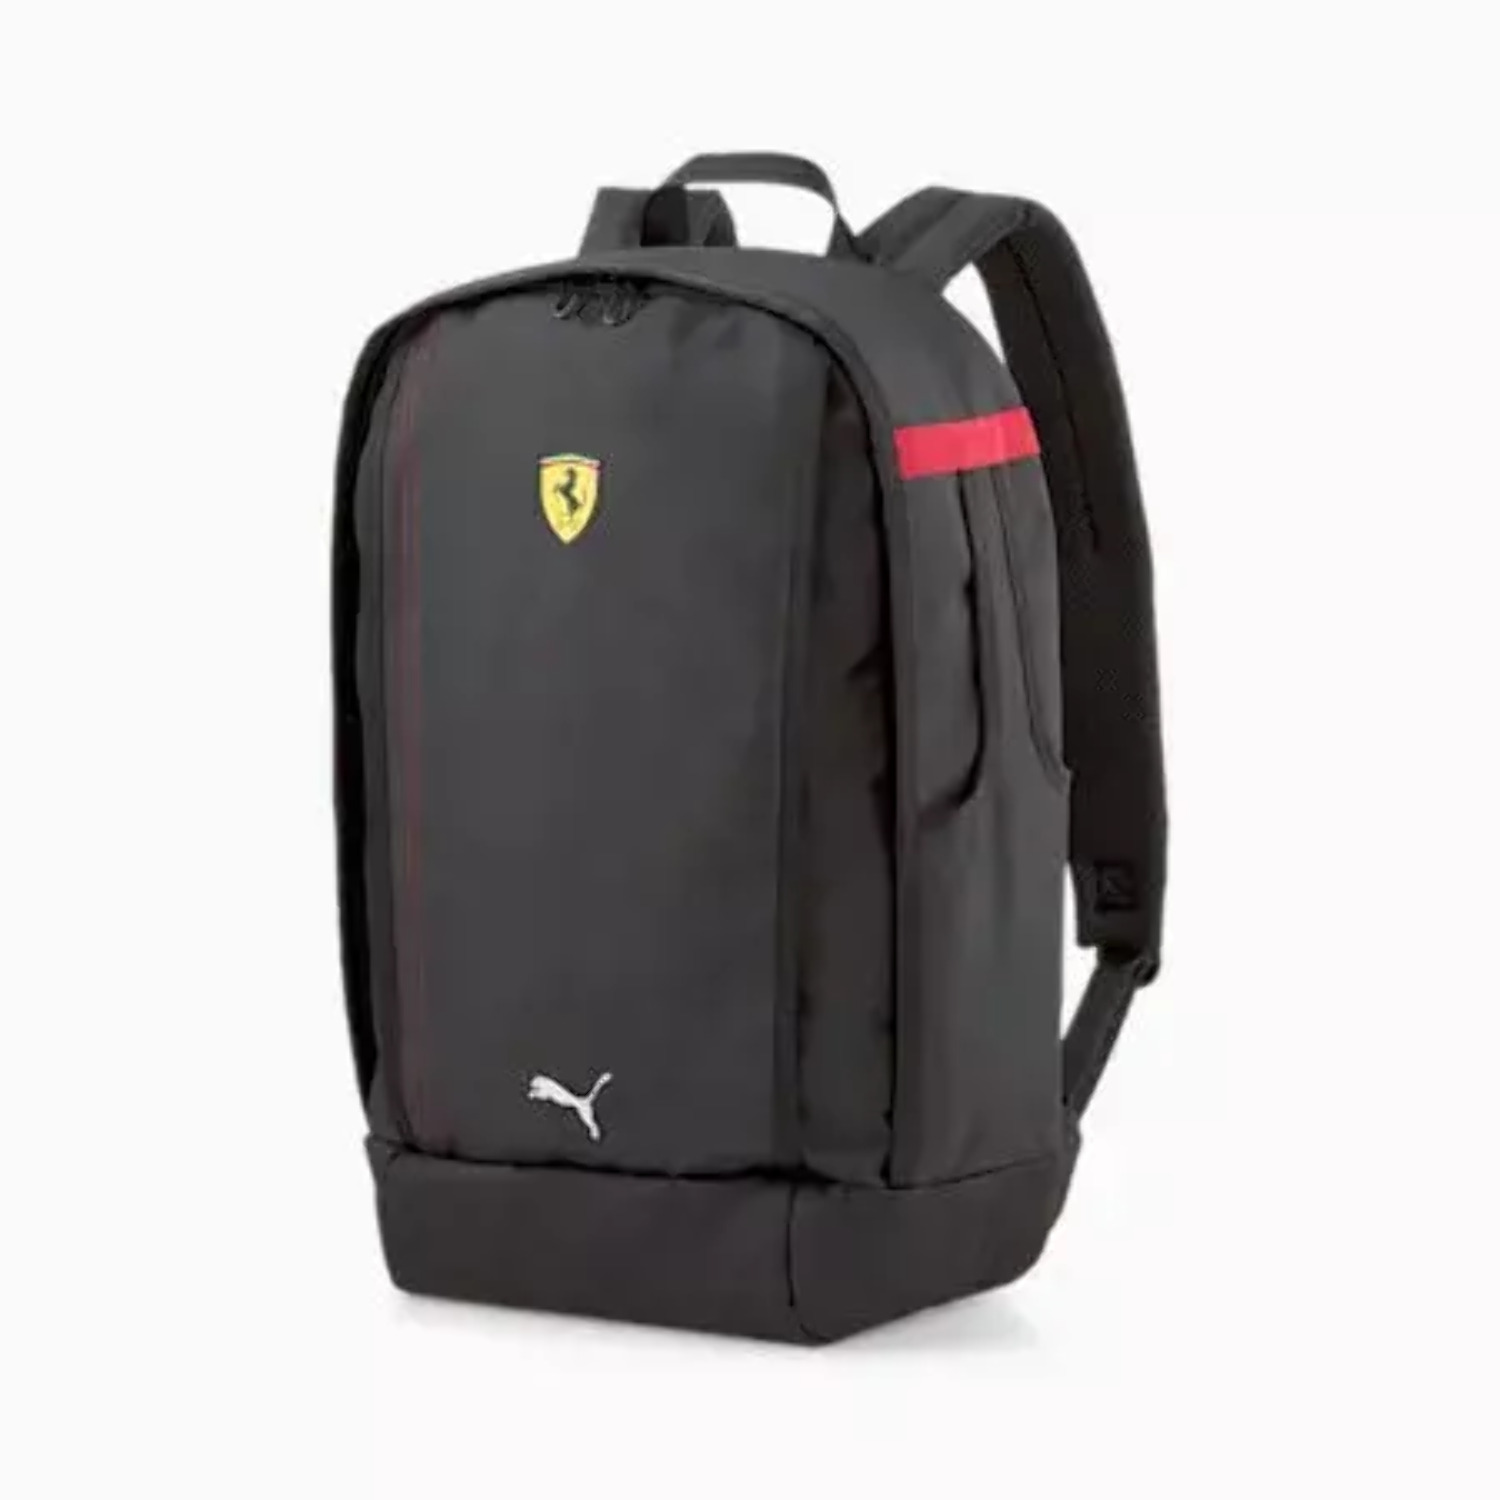 Scuderia Ferrari F1 Puma Race Backpack - image 1 of 6